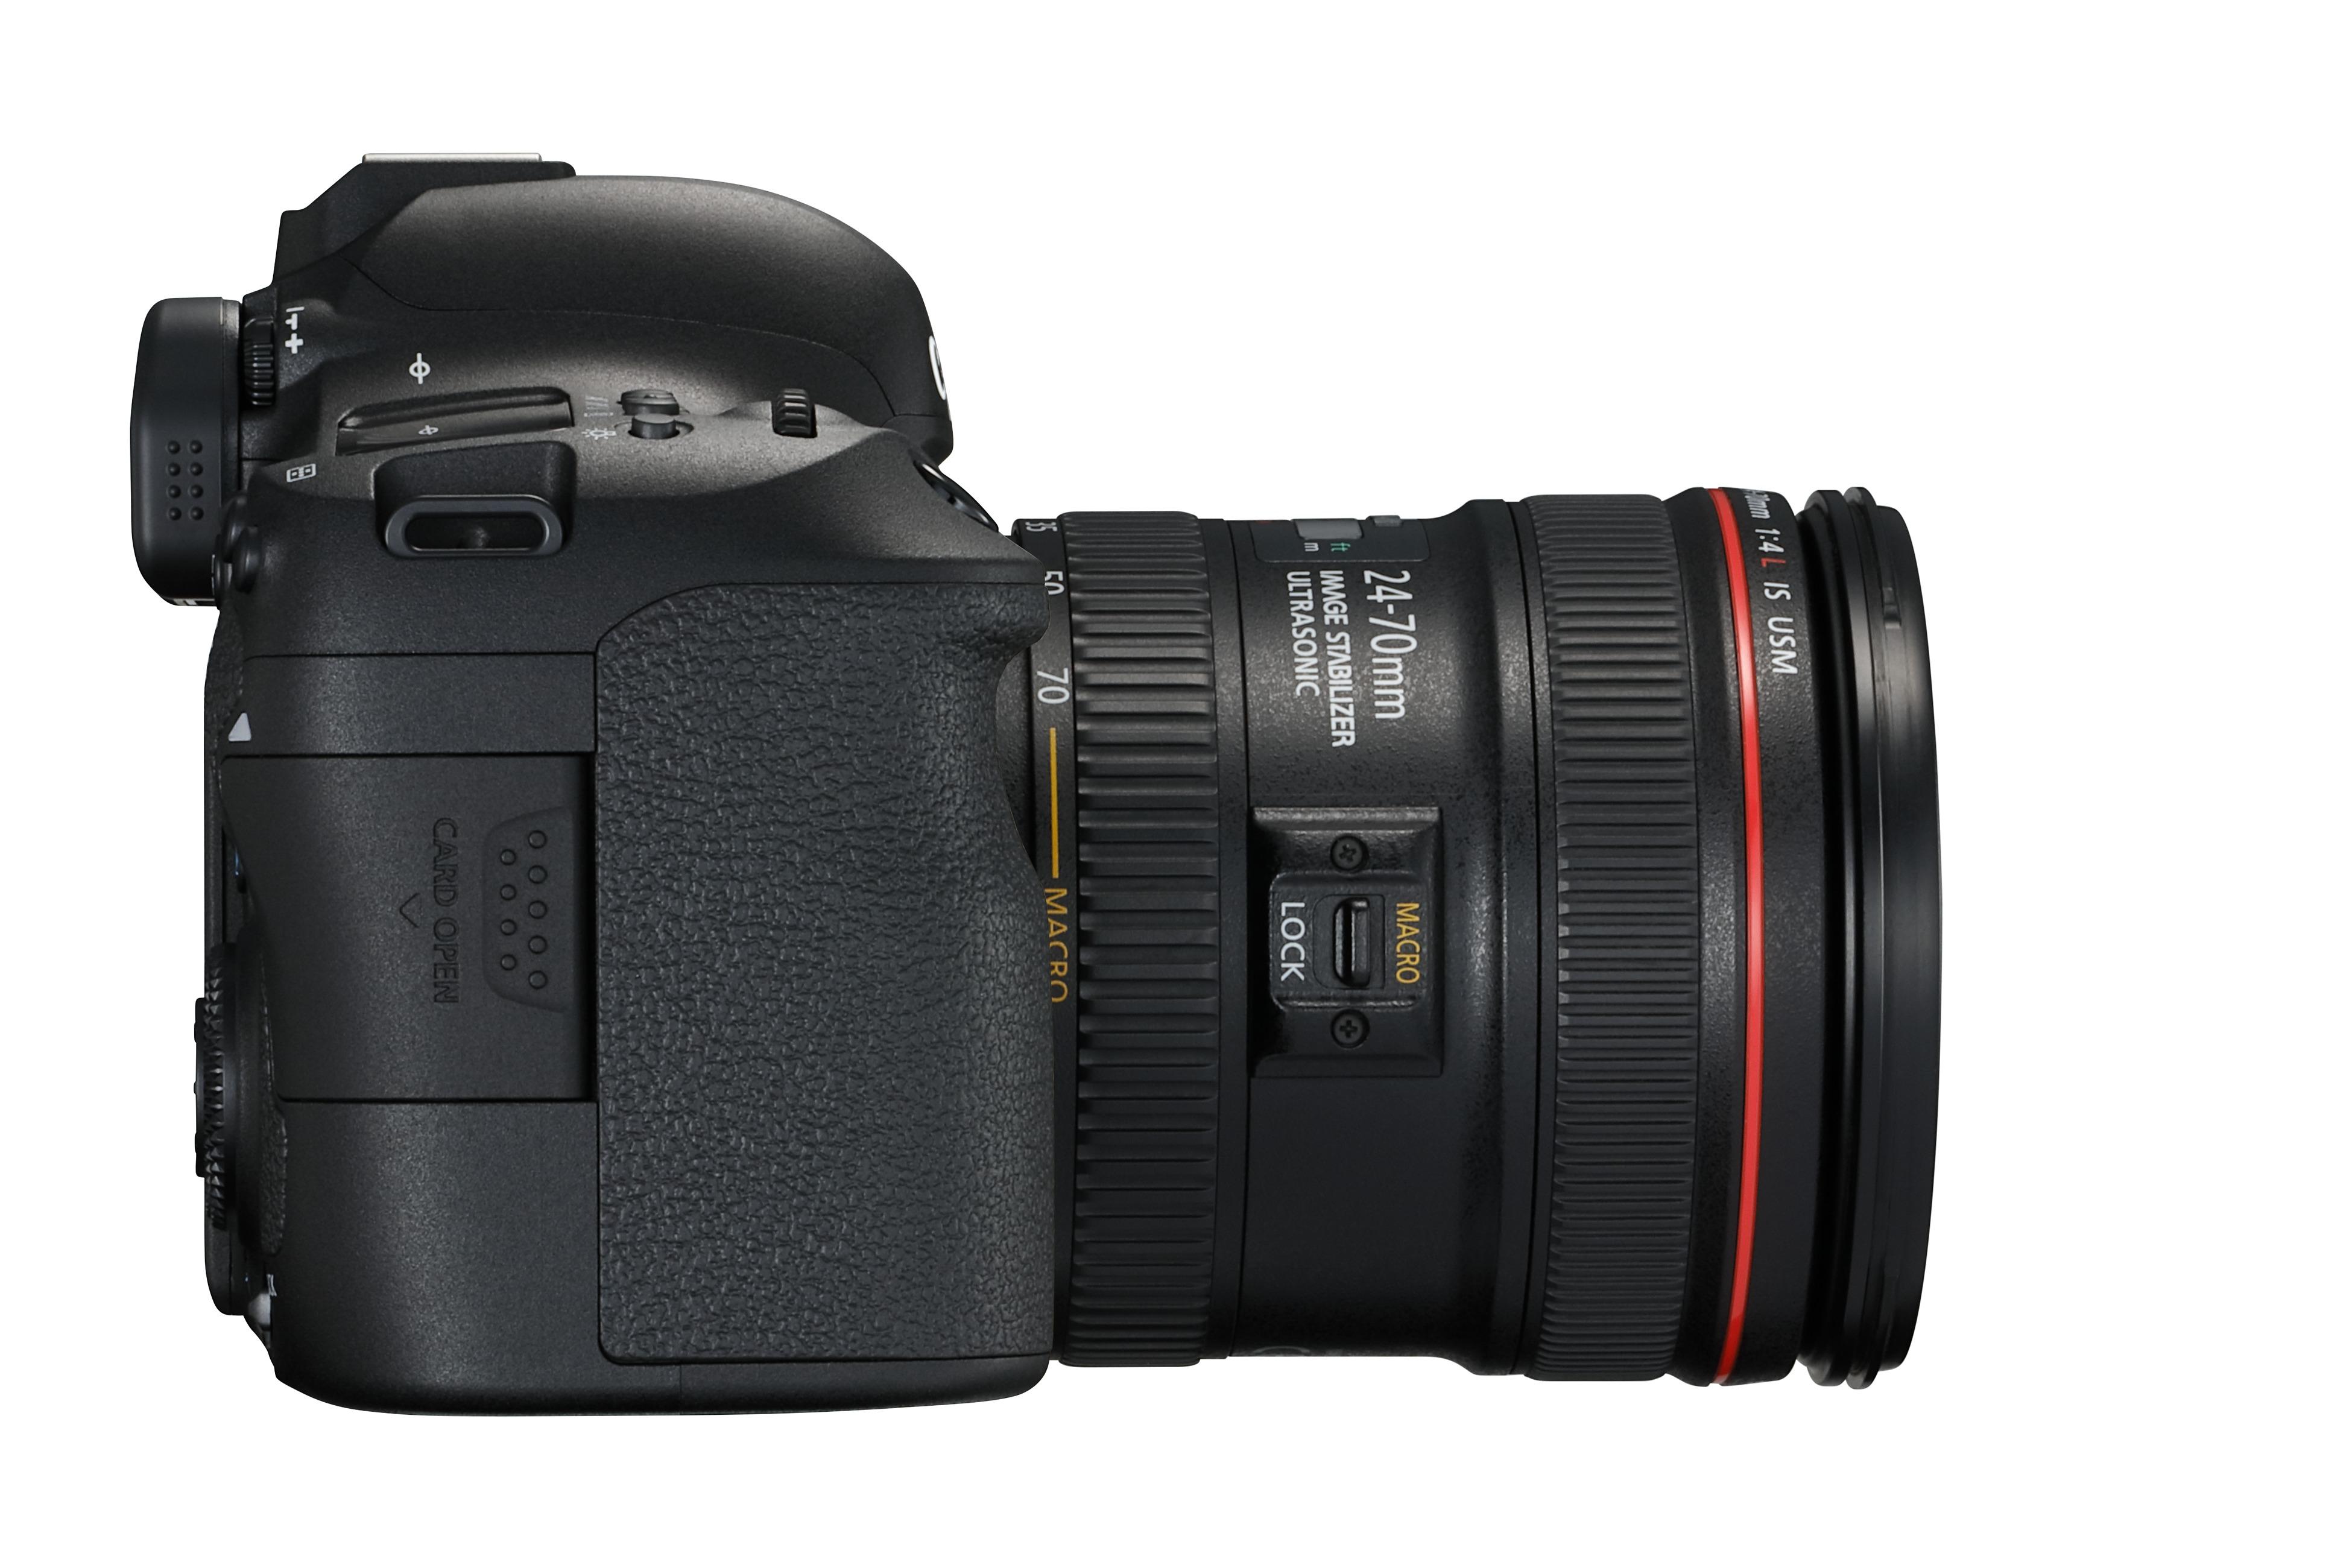 Canon EOS 6D Mark II vs Nikon D750 of the enthusiast